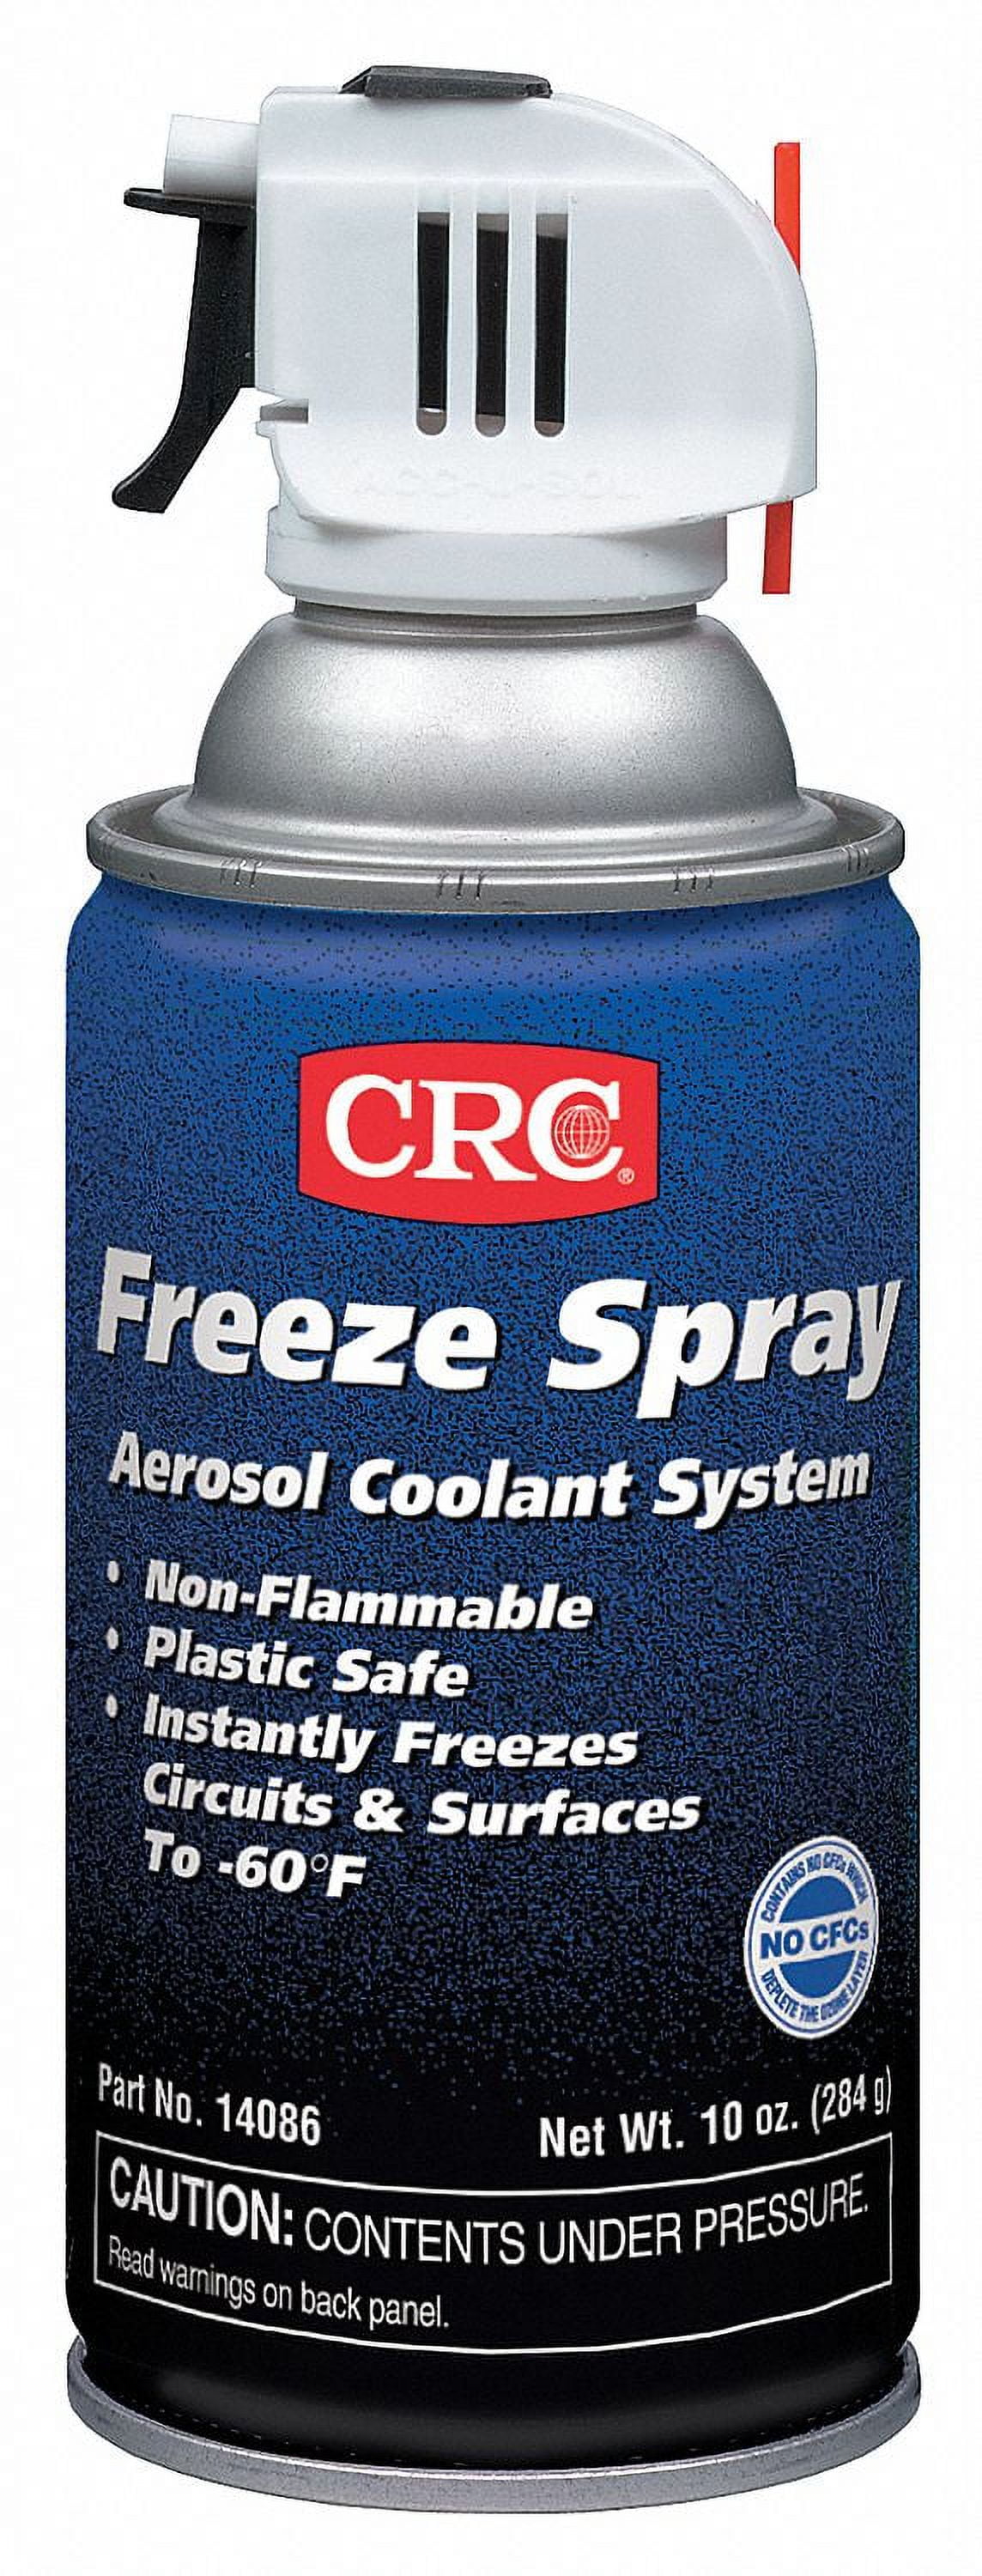 De Icer Spray For Fridge Freezer With Anti-Bacterial Speed Up Defrost 200ml  5x Spray Bottles) De Icer Spray Fridge Freezer Defrost 200ml on OnBuy